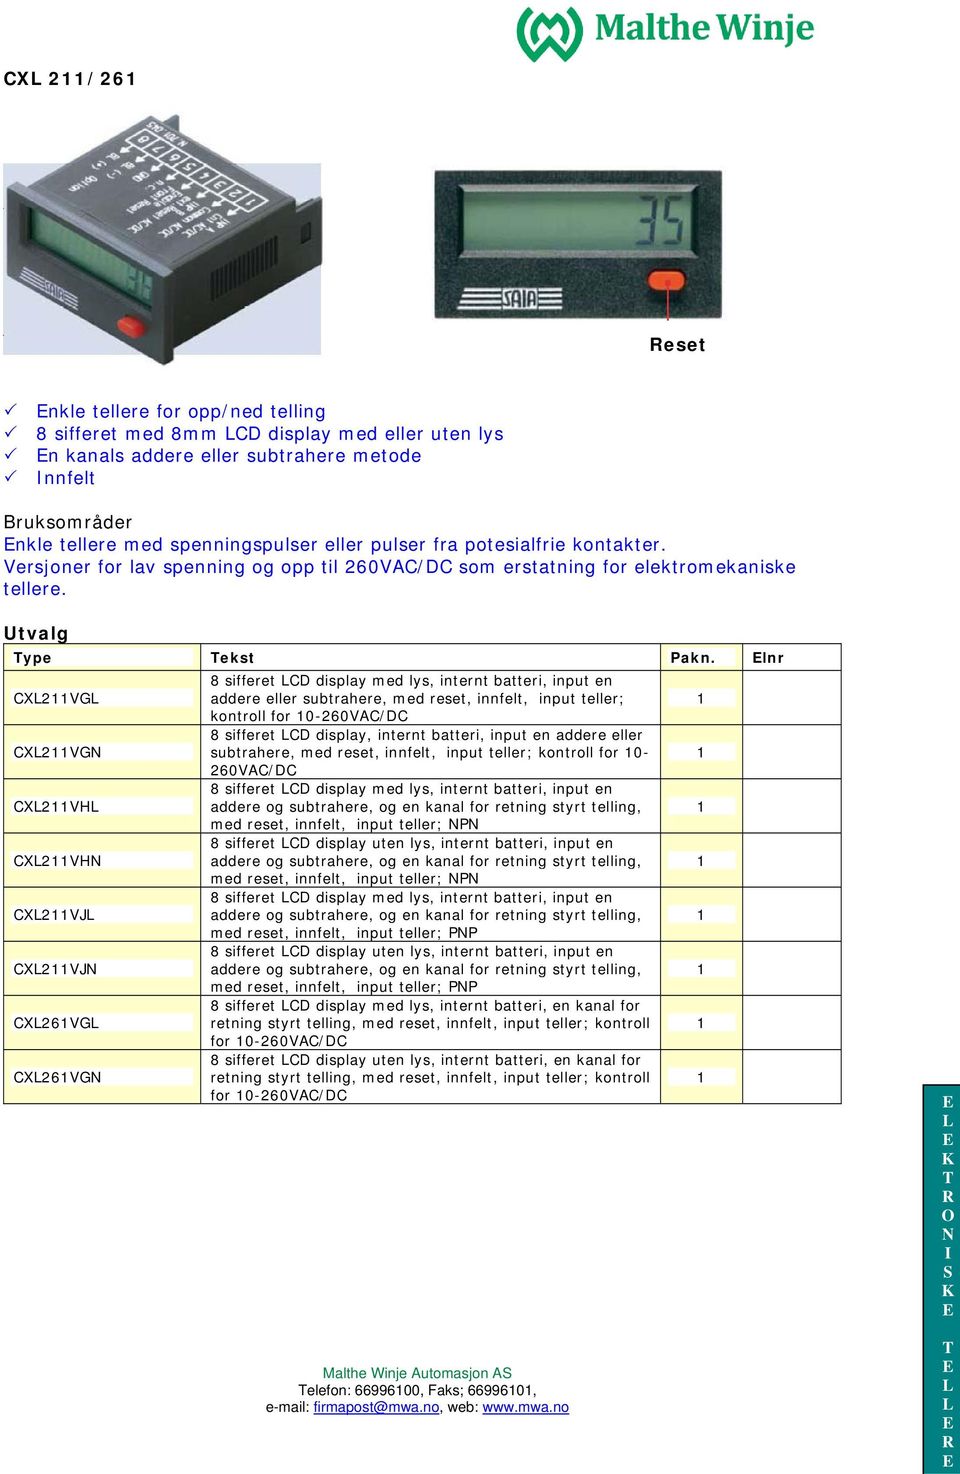 lnr CX2VG 8 sifferet CD display med lys, internt batteri, input en addere eller subtrahere, med reset, innfelt, input teller; kontroll for 0-260VAC/DC CX2VG 8 sifferet CD display, internt batteri,